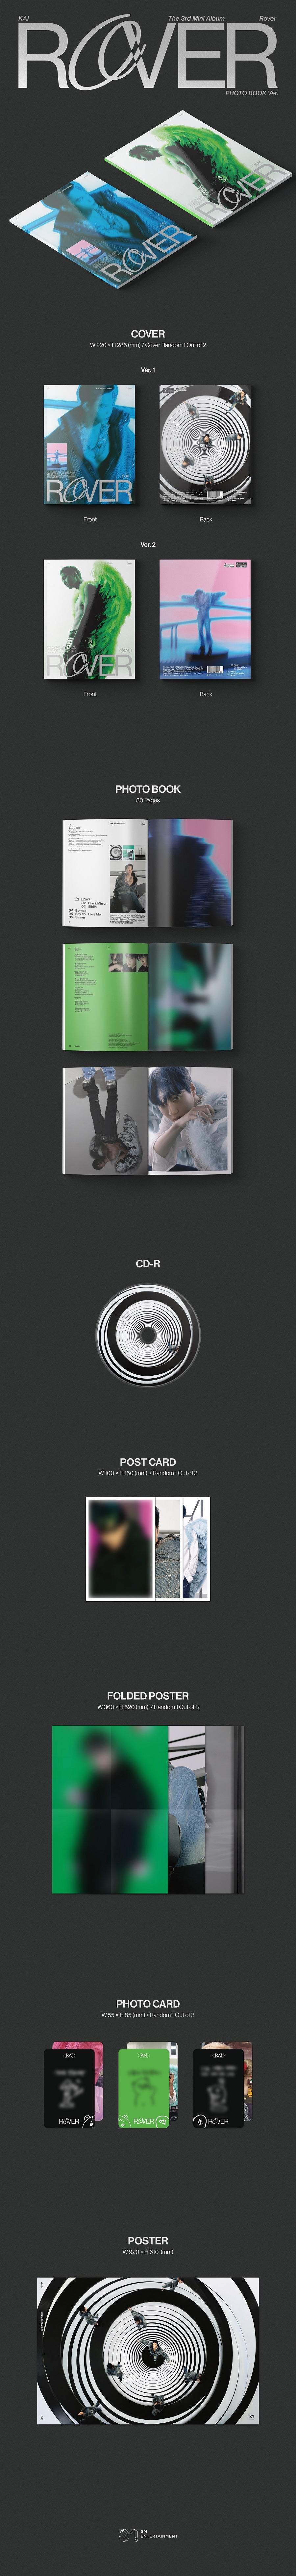 EXO: KAI Mini Album Vol. 3 - Rover (Photobook/Sleeve Version)